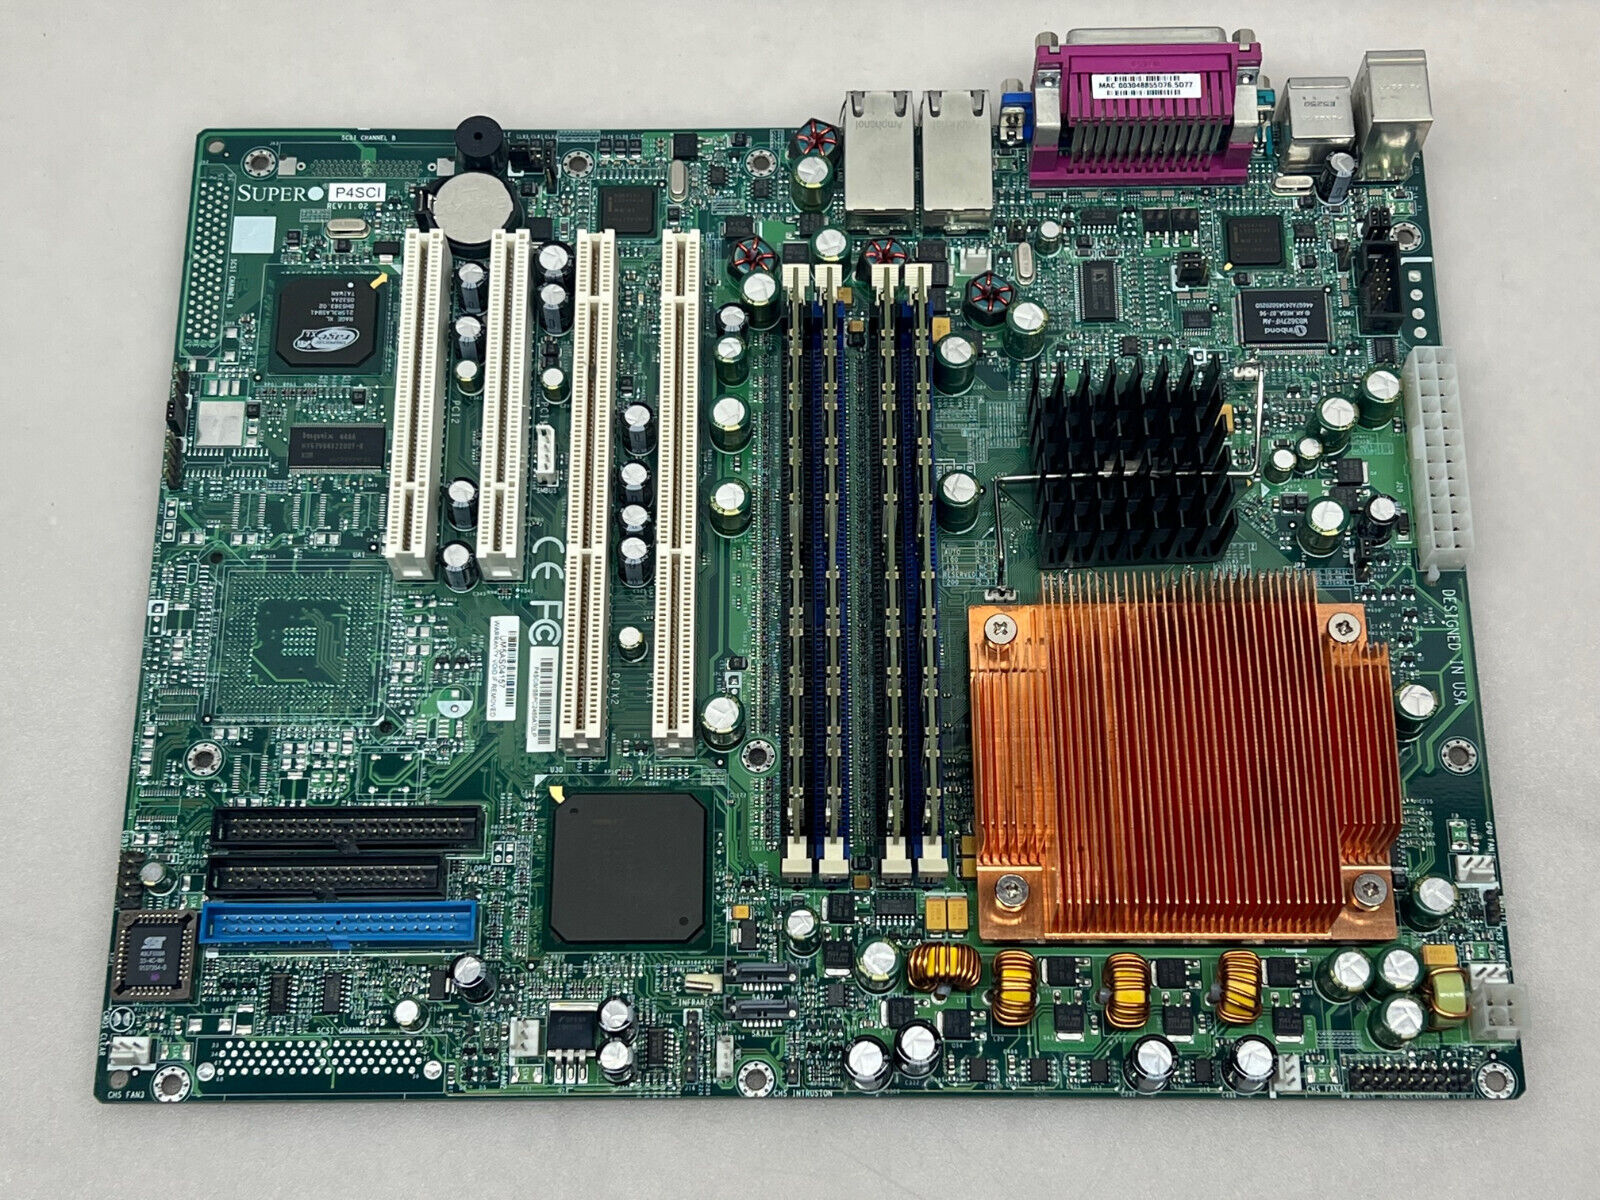 SuperMicro P4SCI Motherboard Plus 3.4gig CPU, 4 Kingston 1 gig sticks 